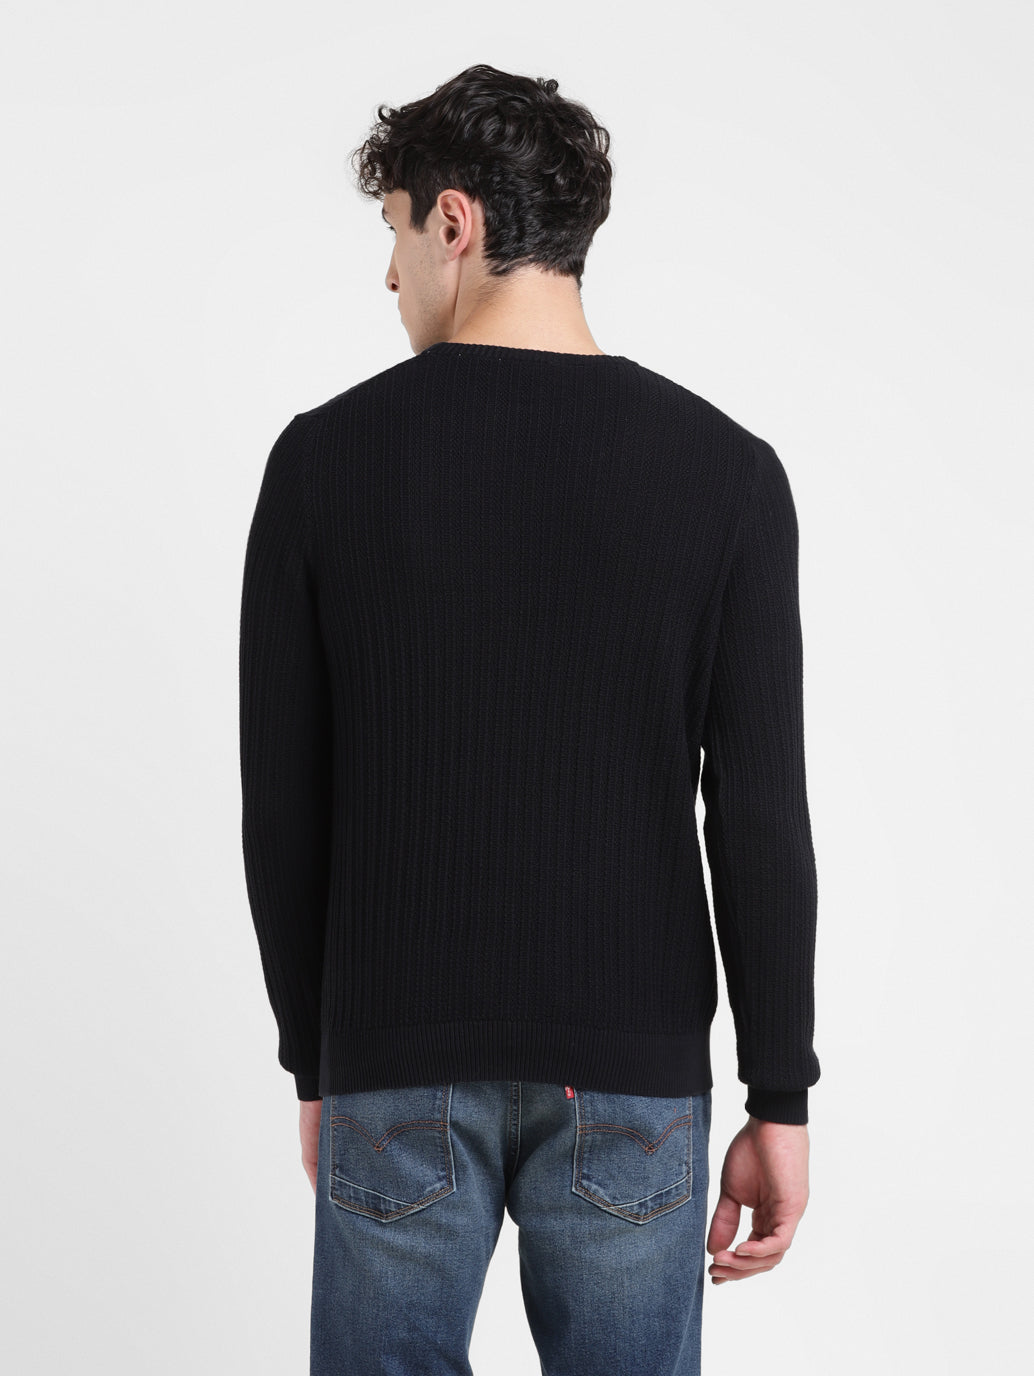 Men's Solid Black Crew Neck Sweater